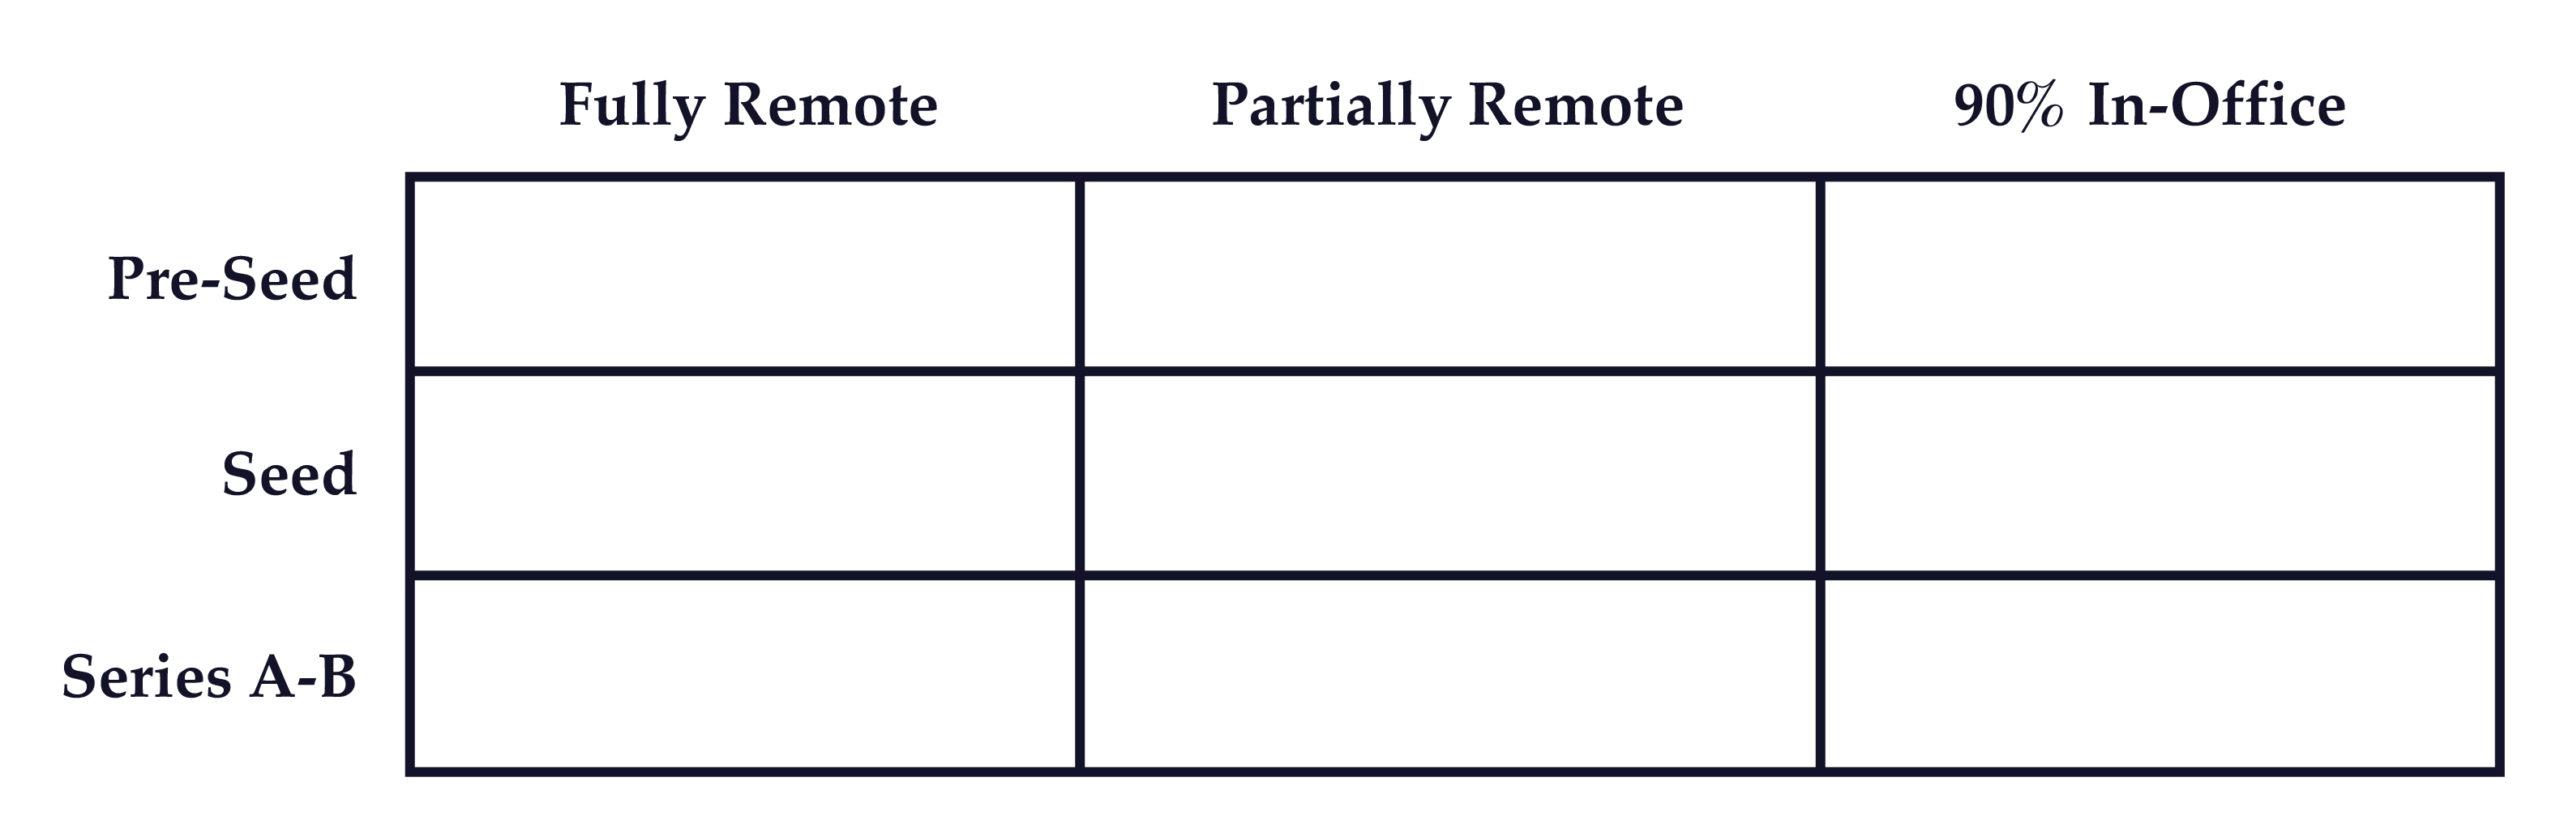 Remote Startup - Chart